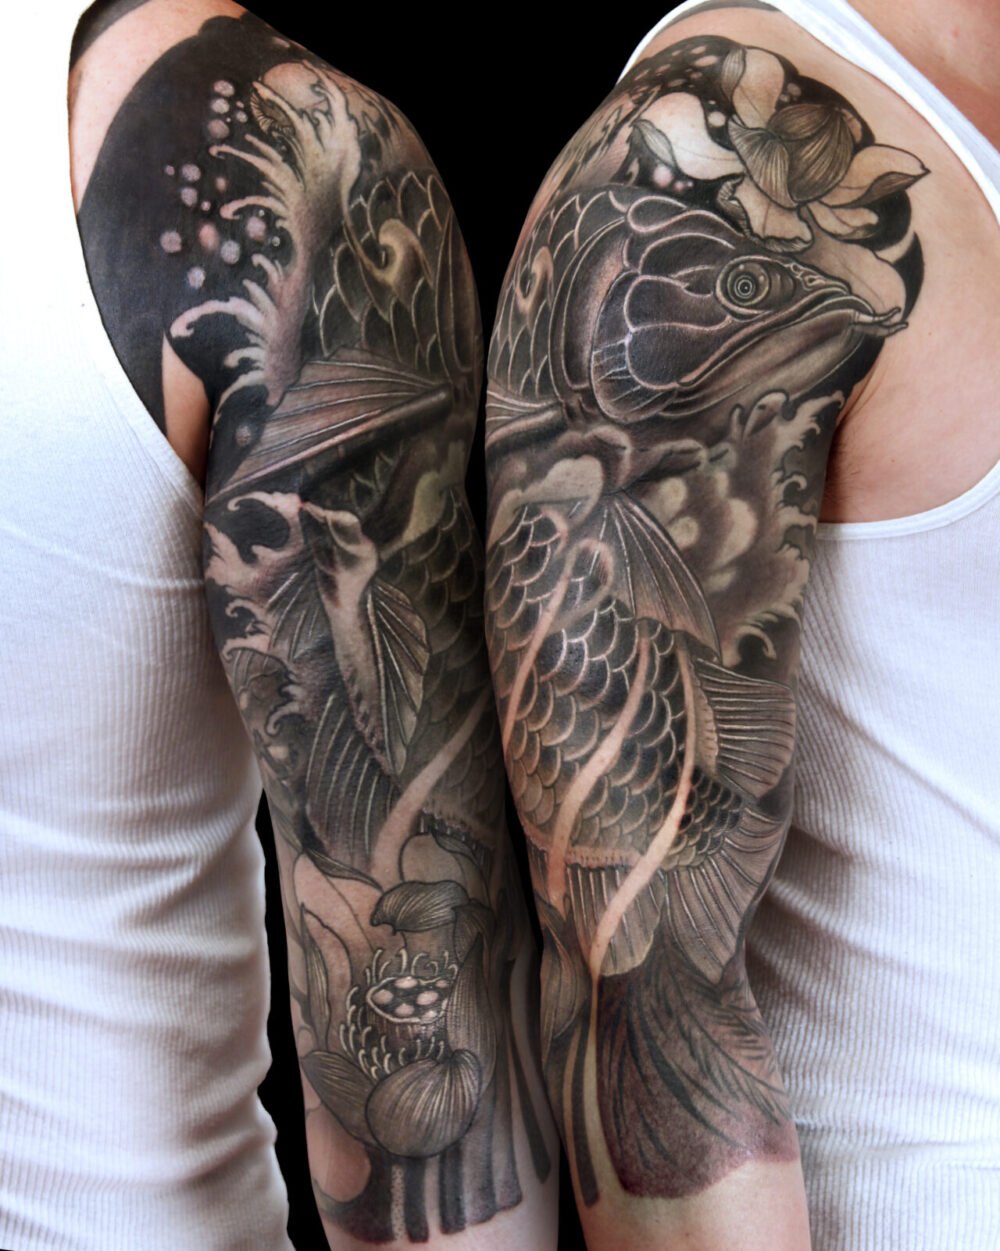 Jess Yen aka HoriYen, My Tattoo, Alhambra, California (USA)